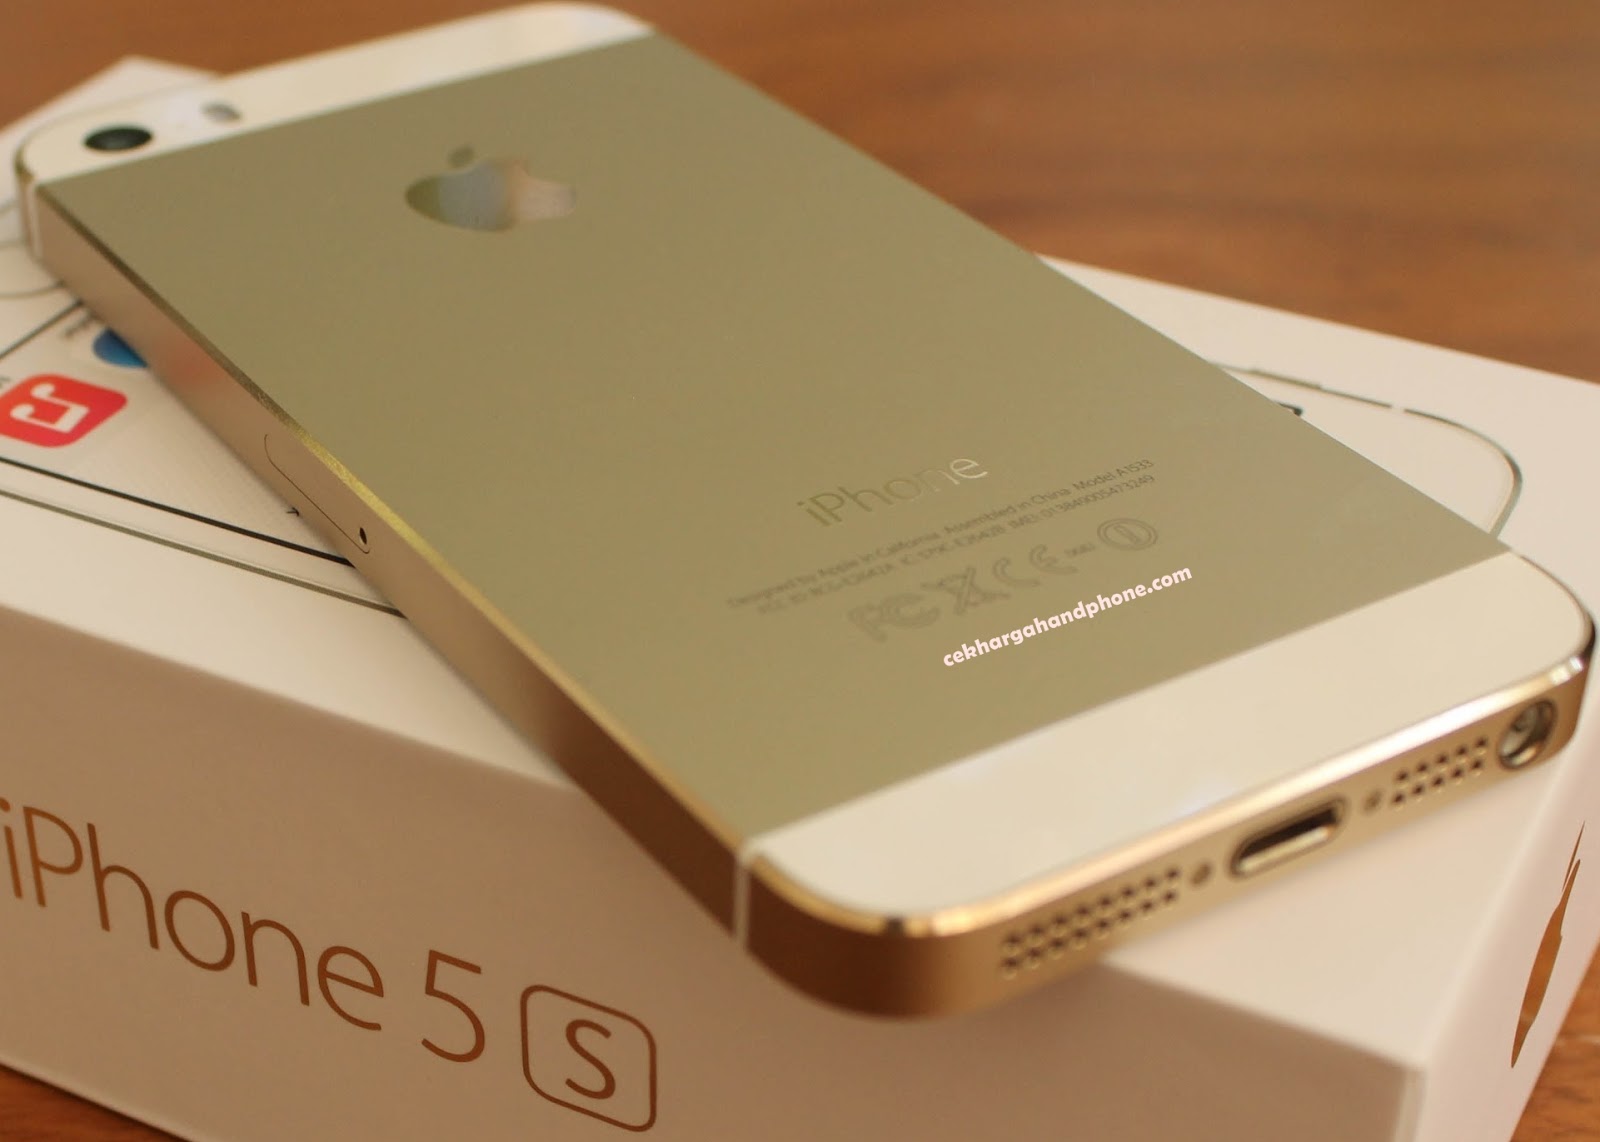 Harga Apple iPhone 5S Gold Terbaru